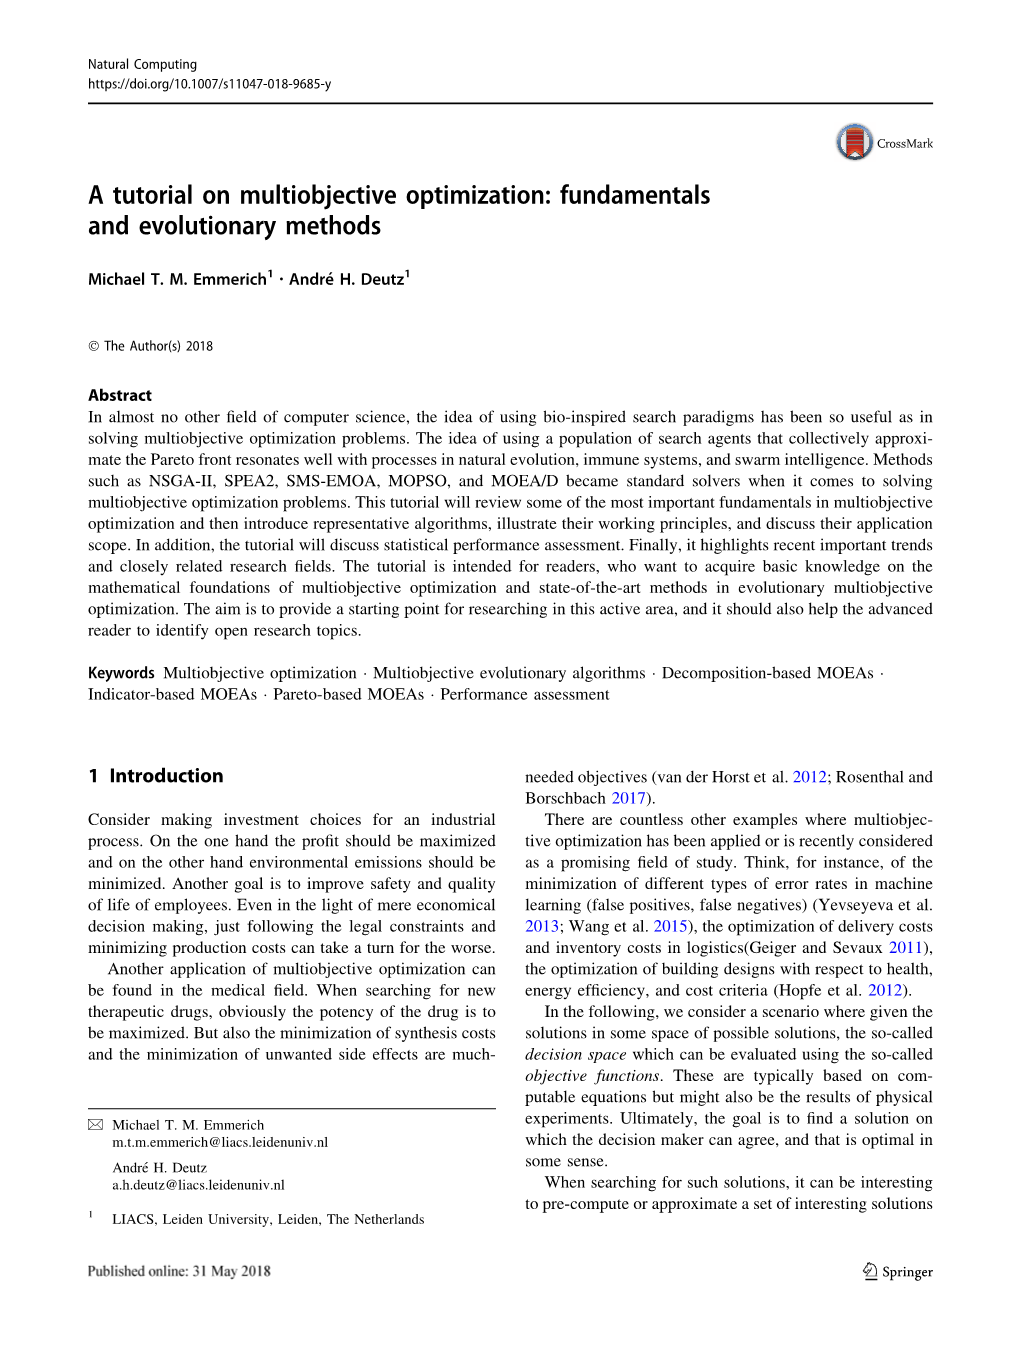 A Tutorial on Multiobjective Optimization: Fundamentals and Evolutionary Methods